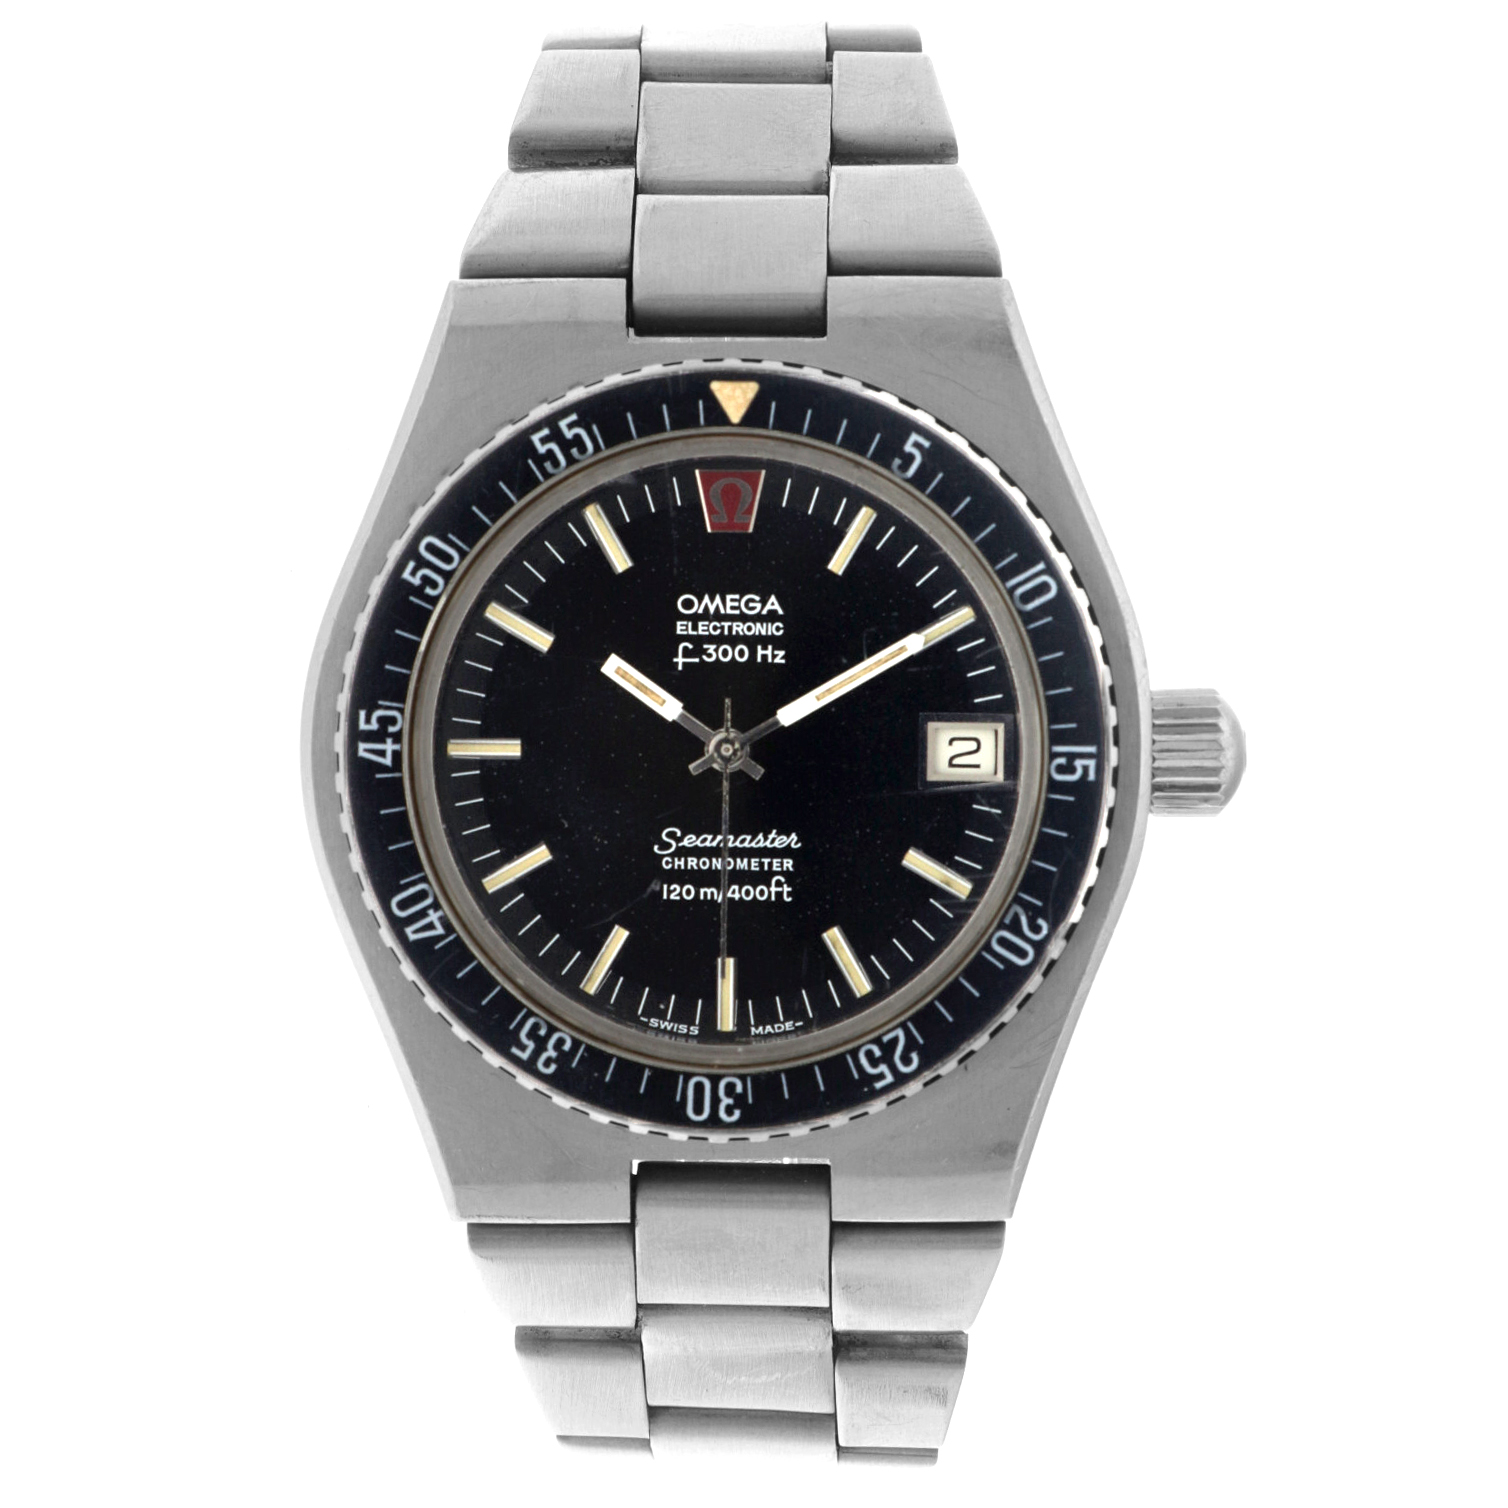  No Reserve - Omega Seamaster F300Hz - Men's watch - 1970 - 1980.